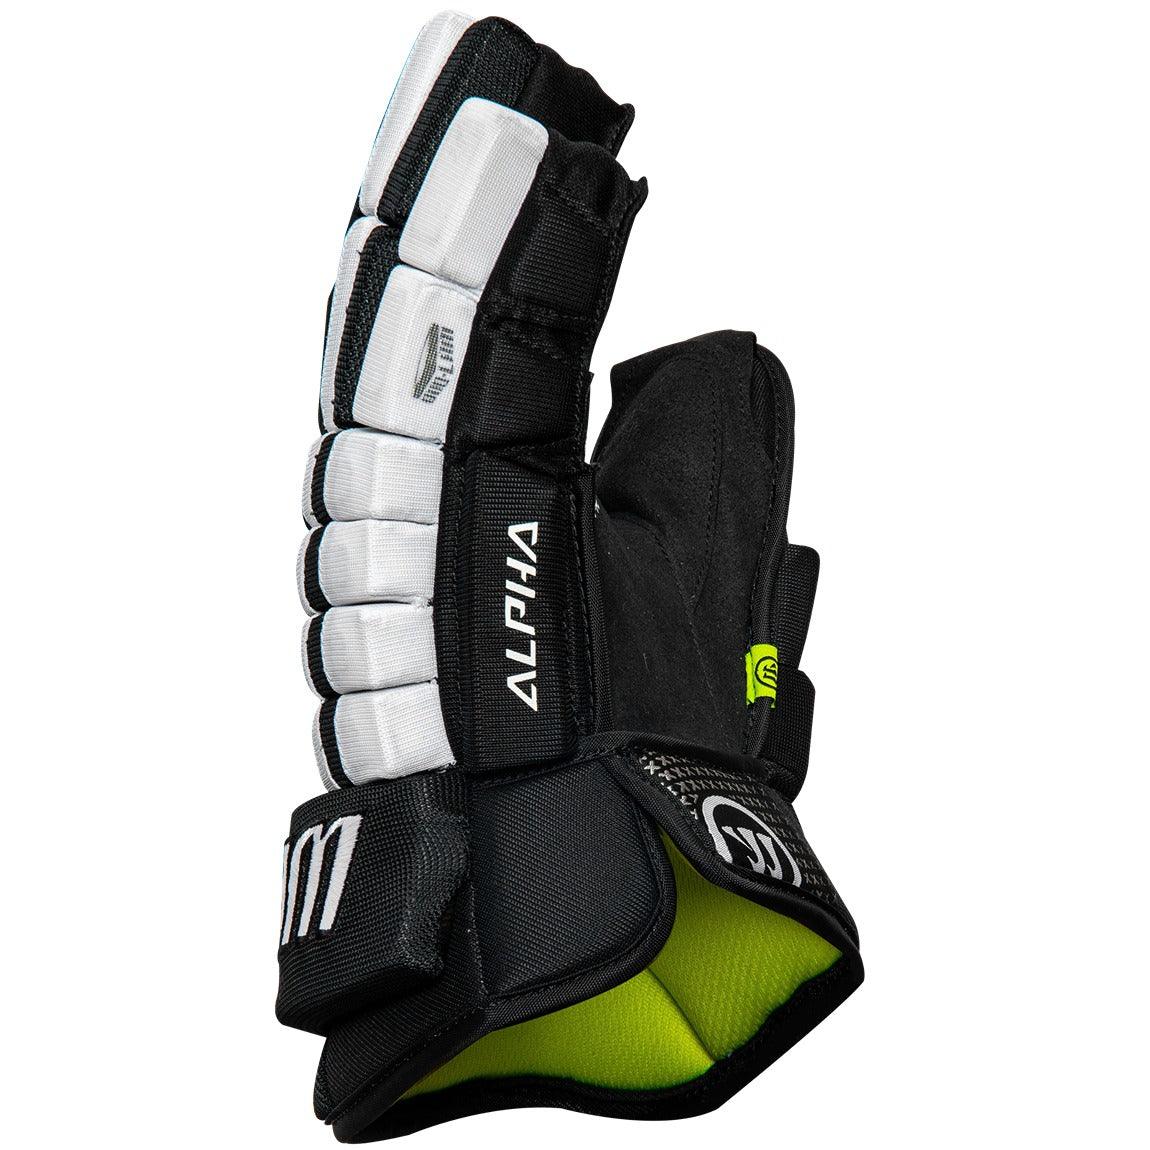 Warrior FR2 Hockey Gloves 